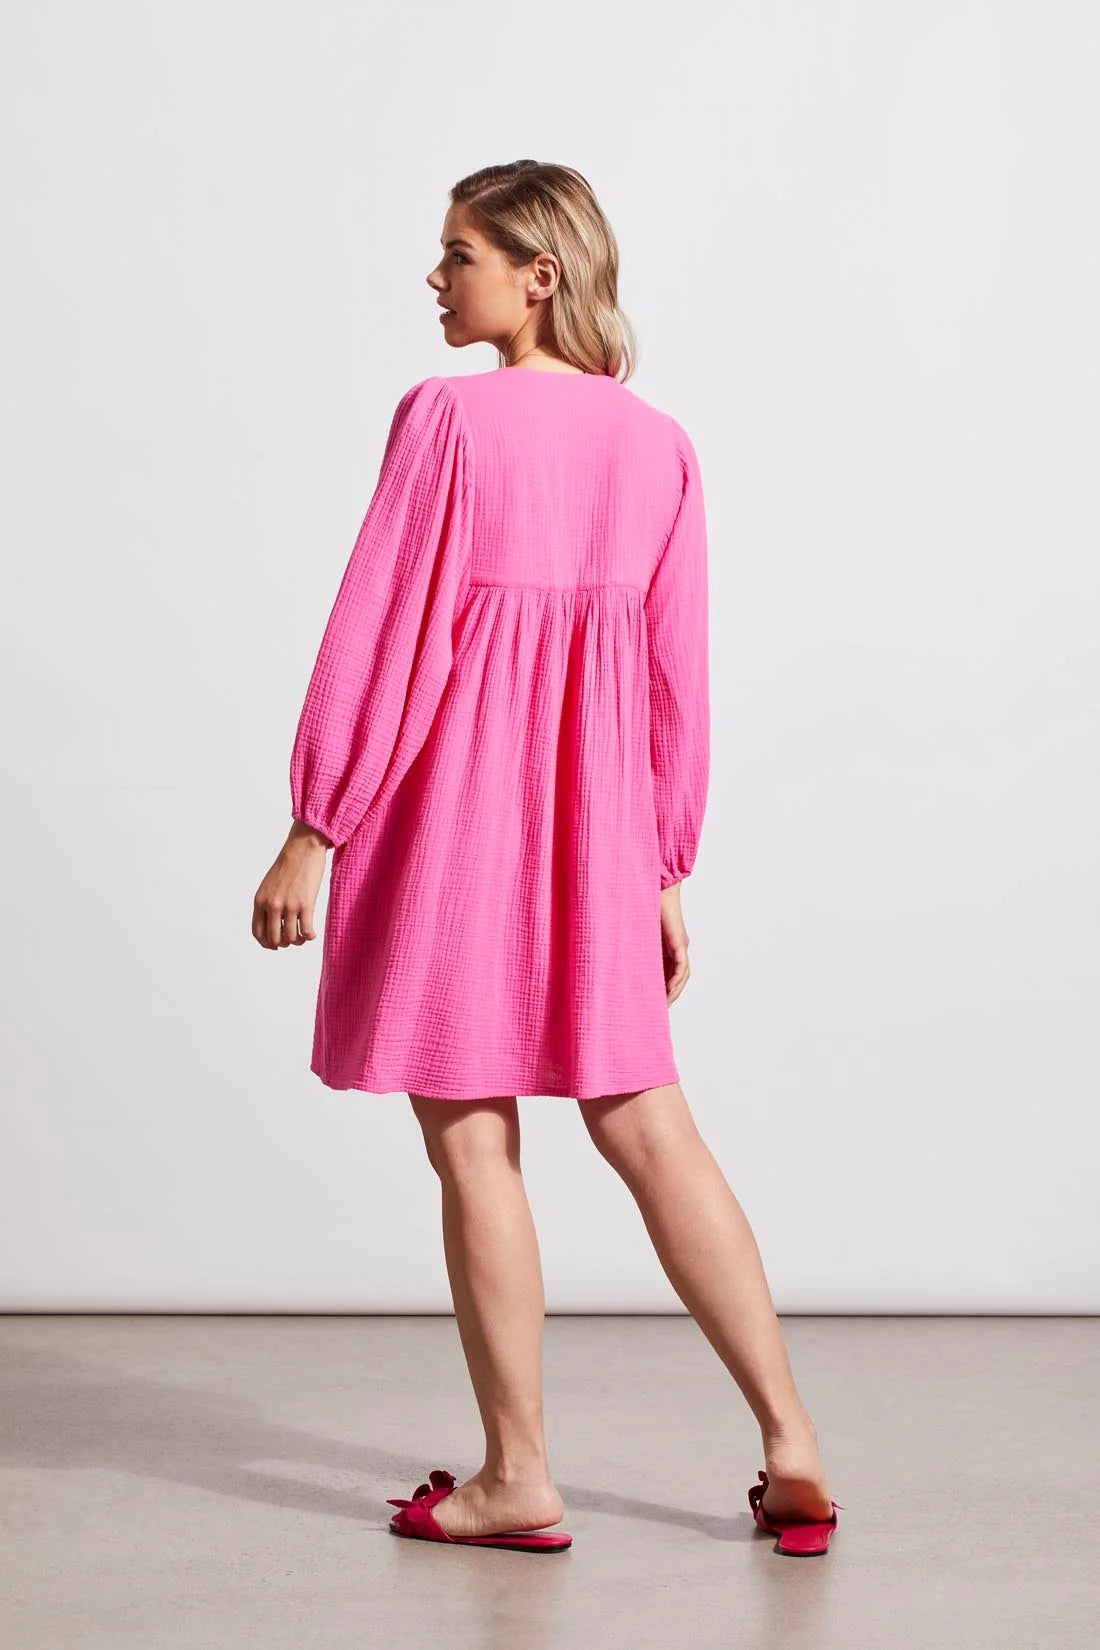 Hot Pink Cotton Gauze Puffy Sleeve Dress